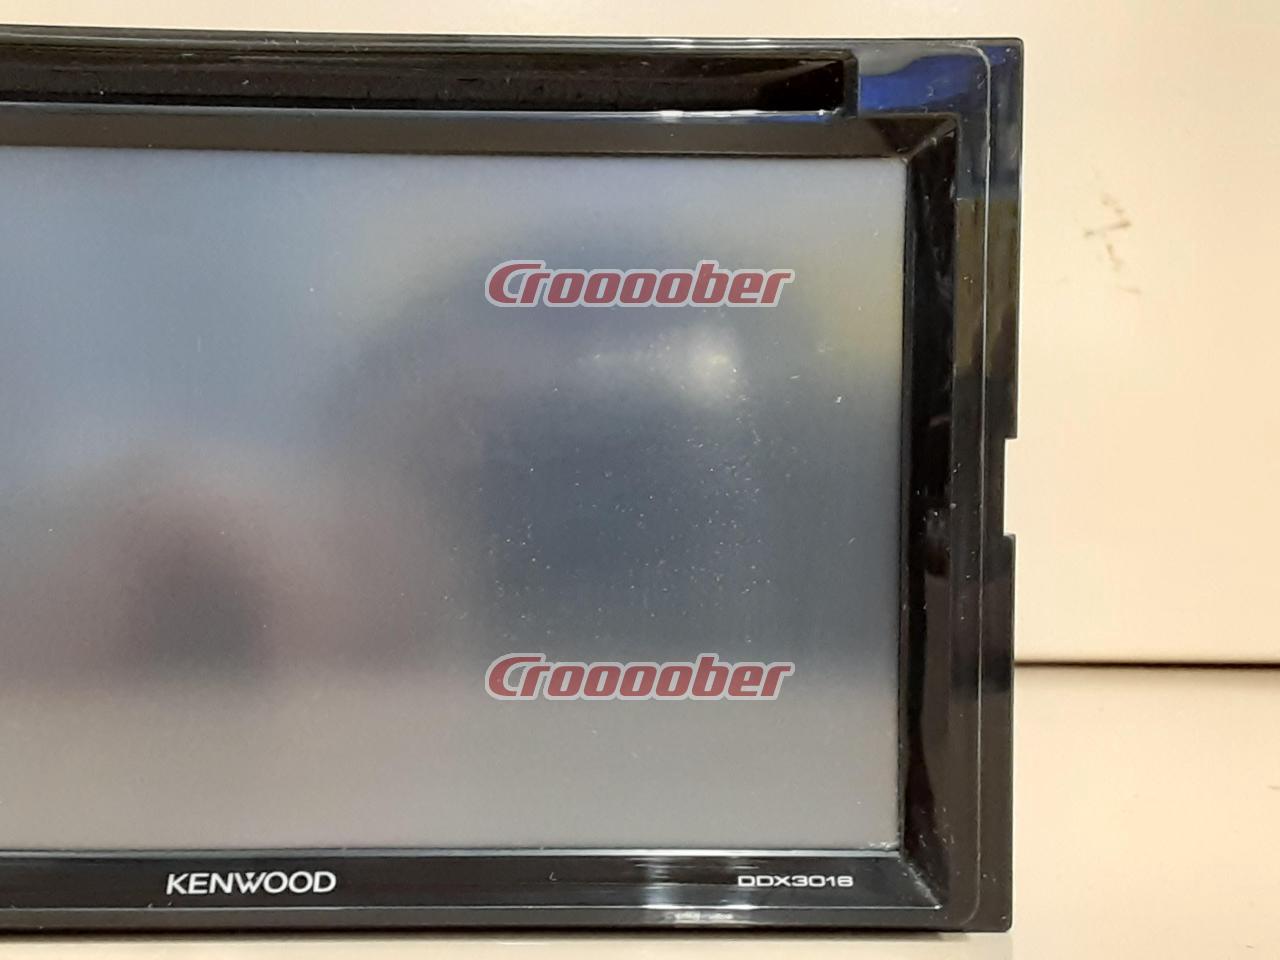 KENWOOD(ケンウッド) DDX3016 DVD/CD/USB/ipodレシーバー (1DIN/180mm 